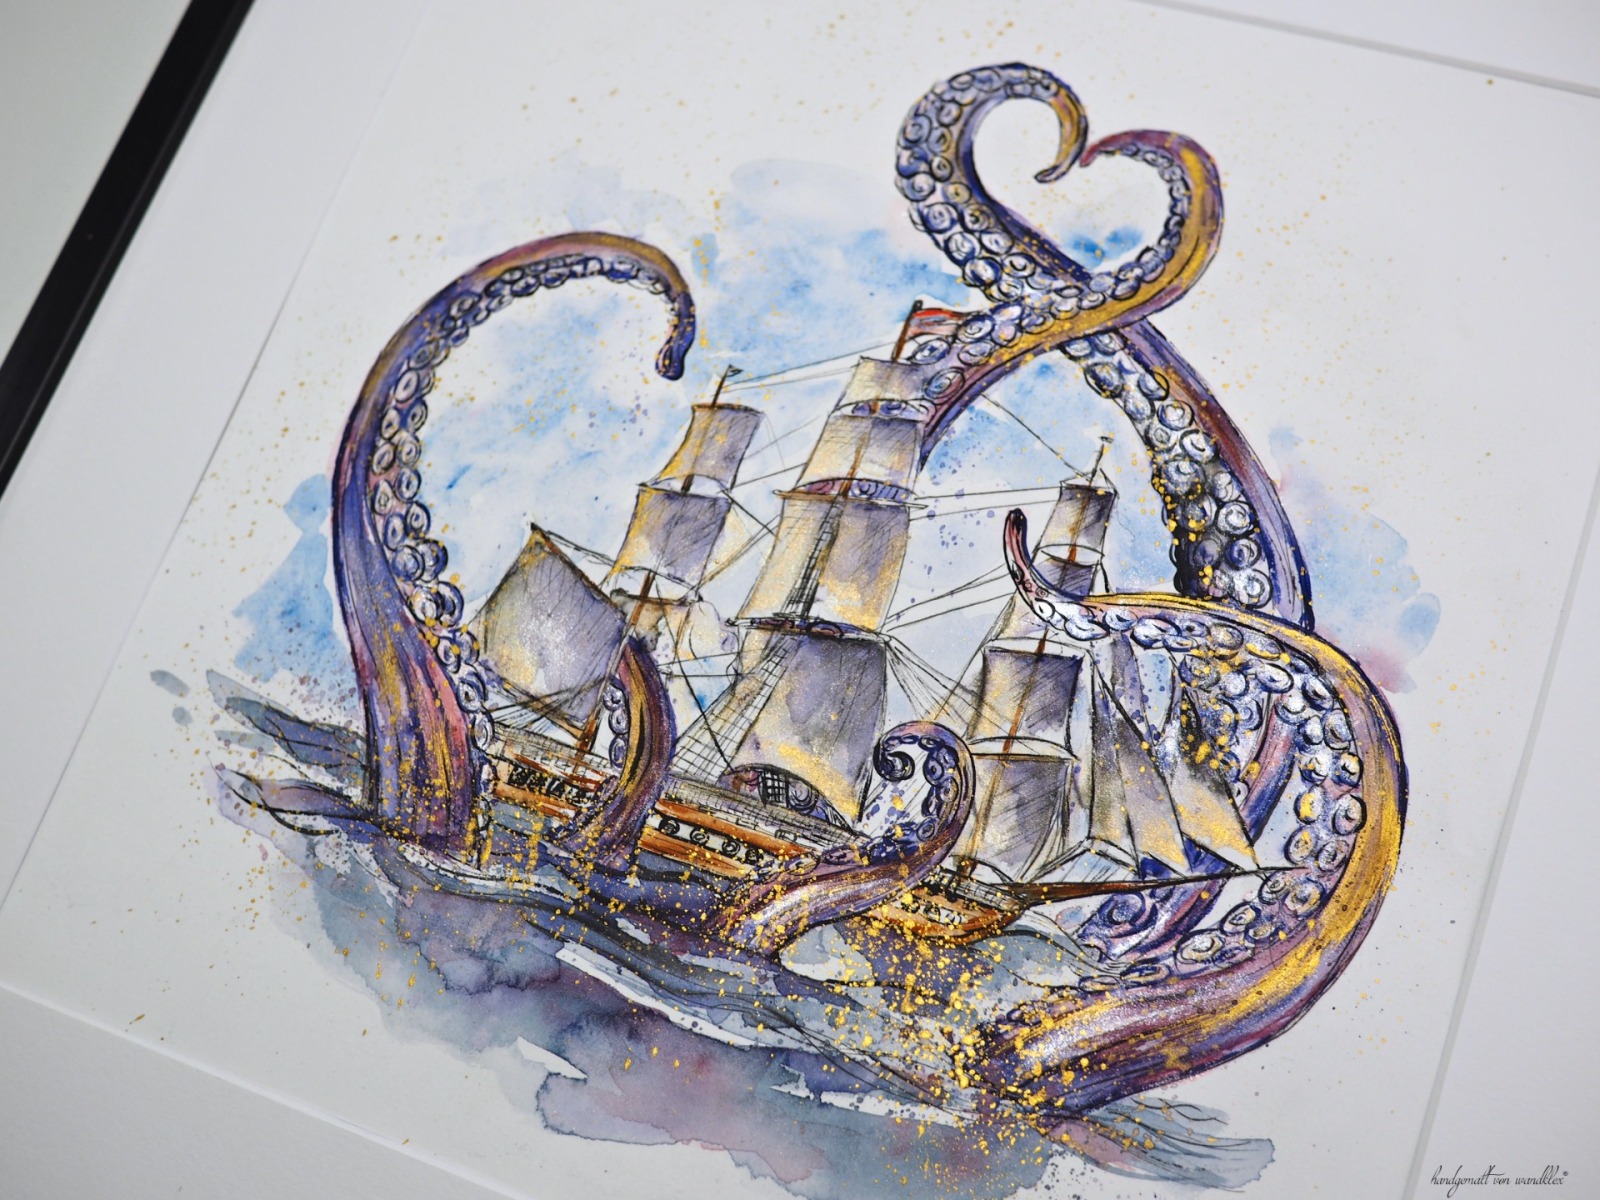 RESERVIERT The Embrace of the Monday - maritimes Seegetümmel mit Kraken Illustration großes handgemaltes gerahmtes Original 3